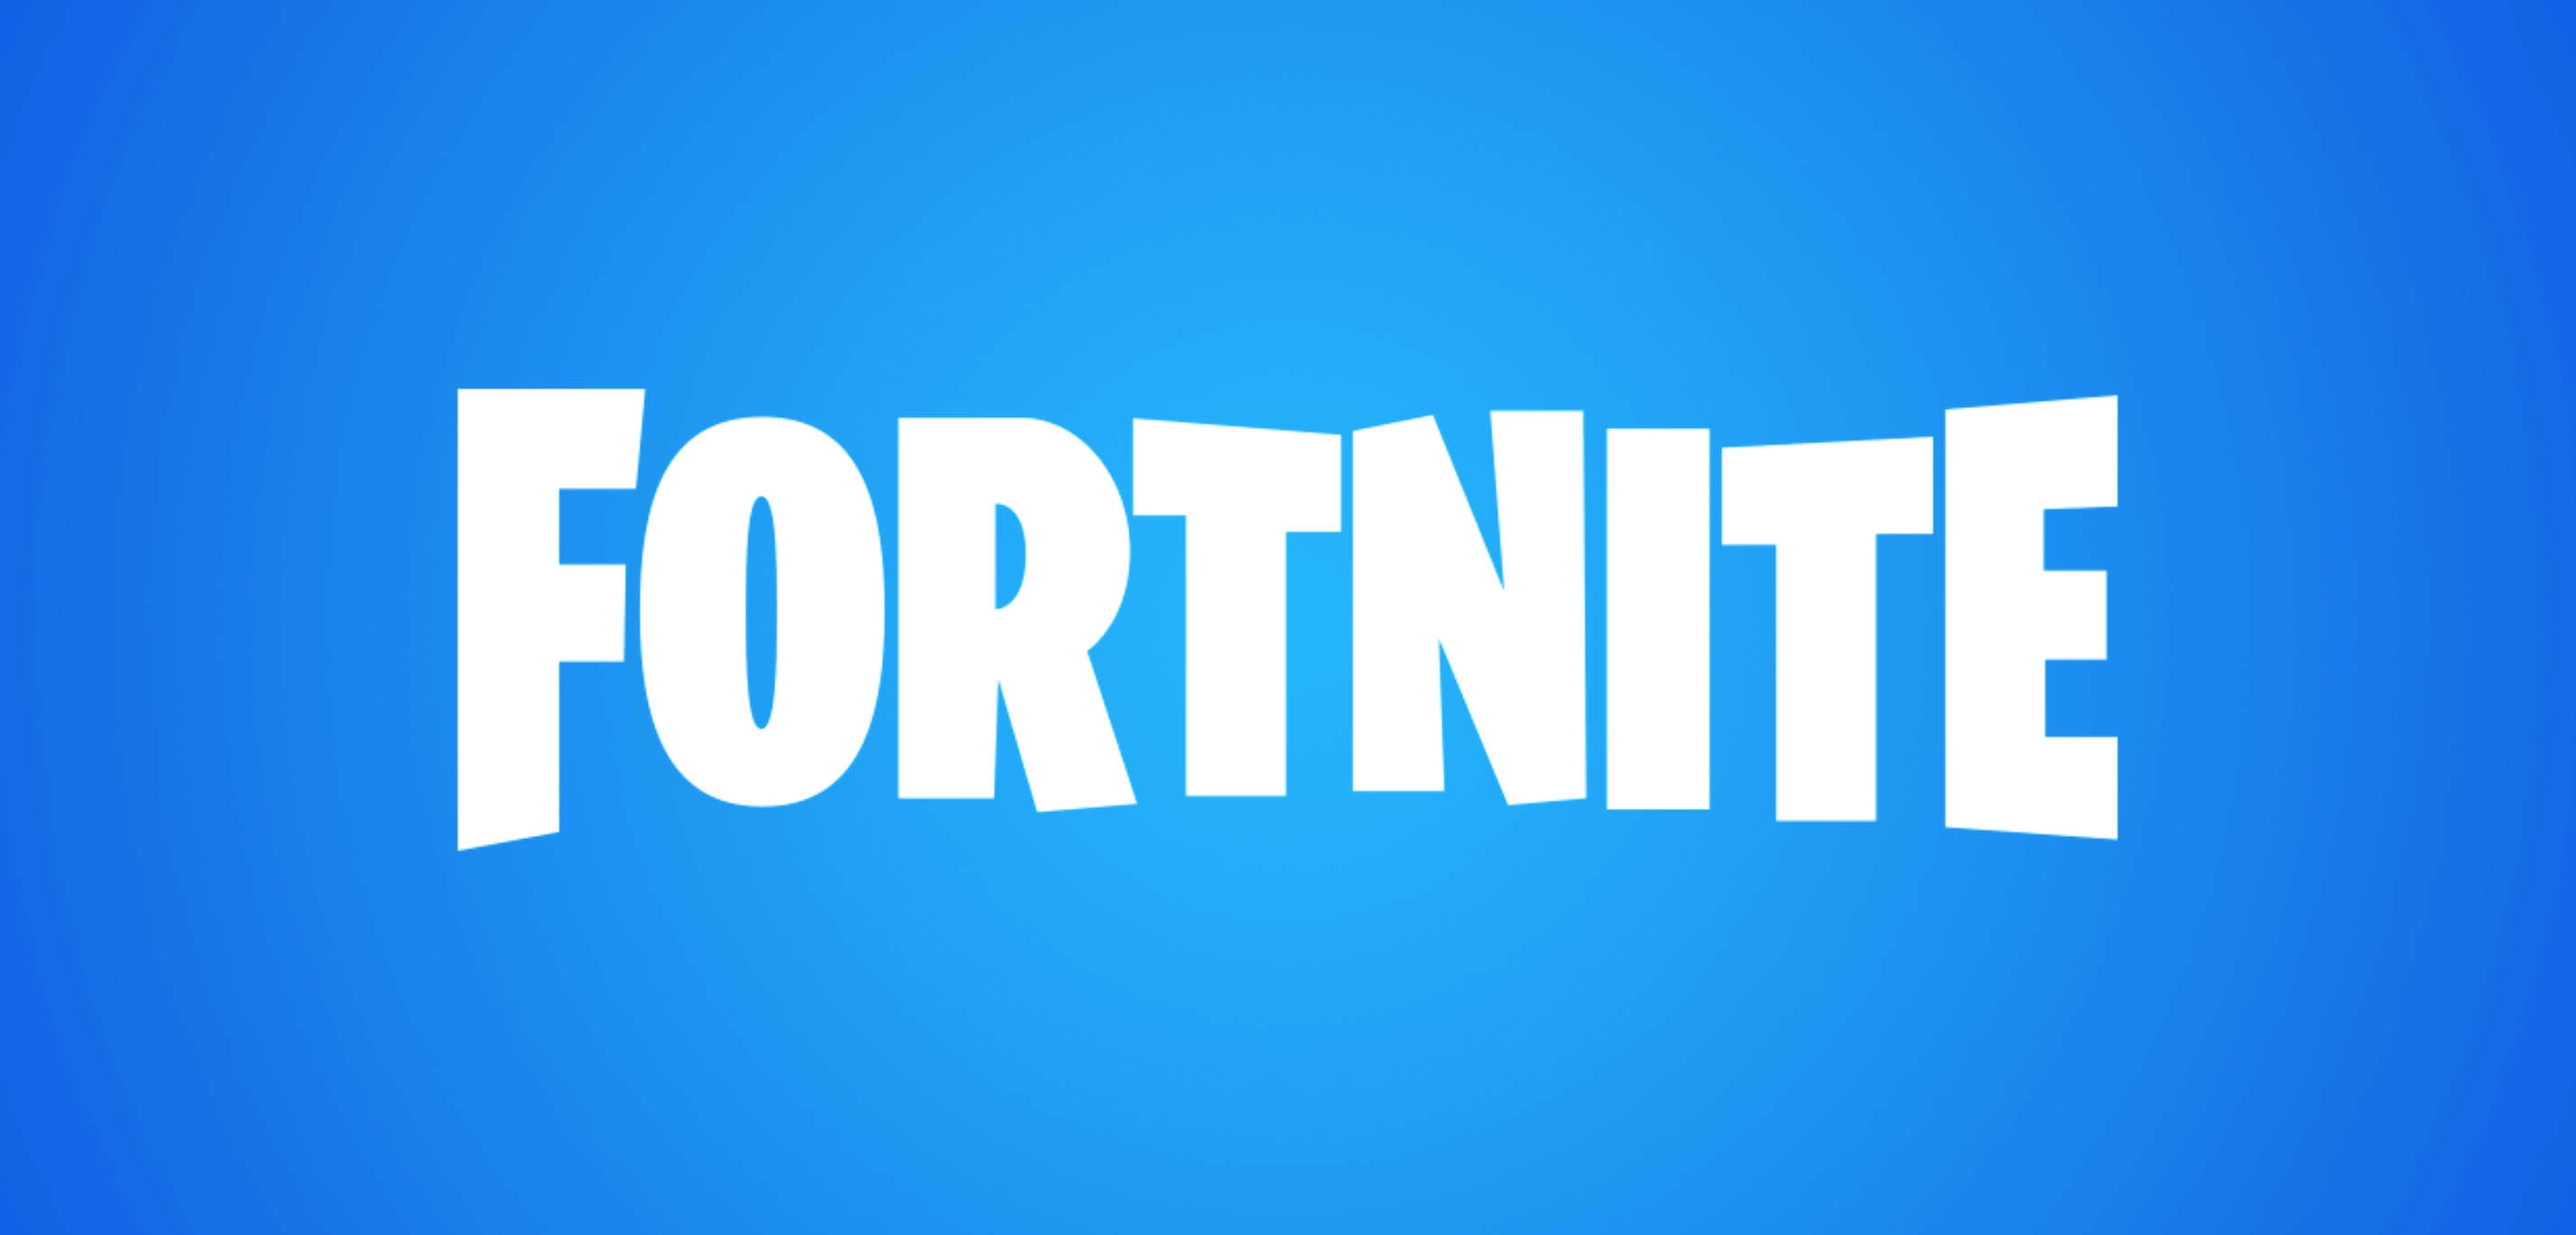 Fortnite logo from Epic Games